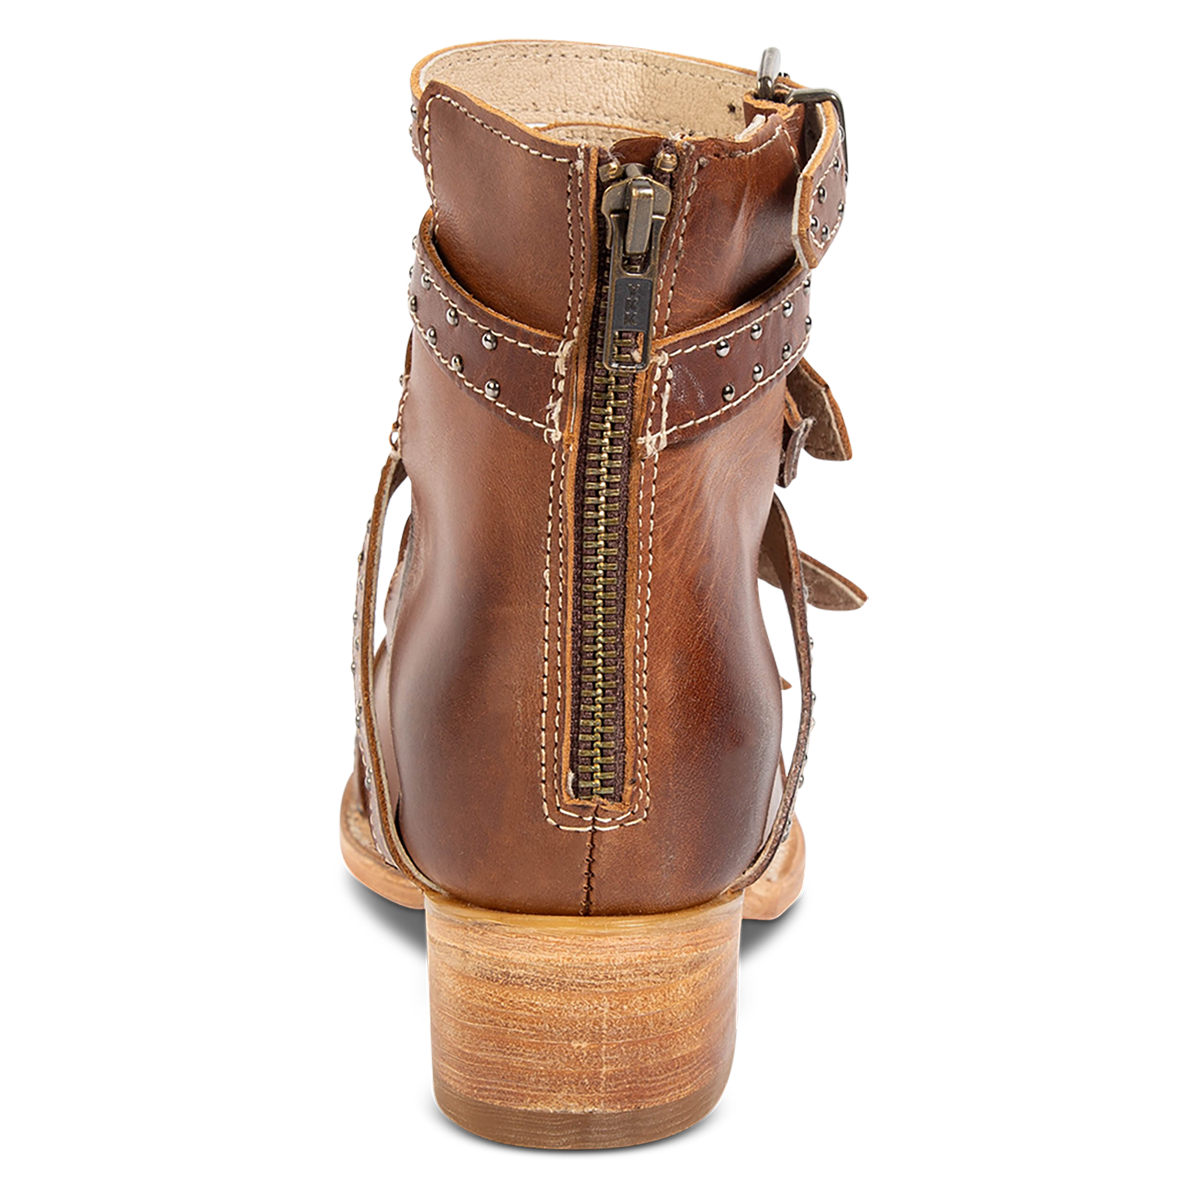 Back view showing a working brass zipper and low block heel on FREEBIRD women's Gunnar cognac leather sandal